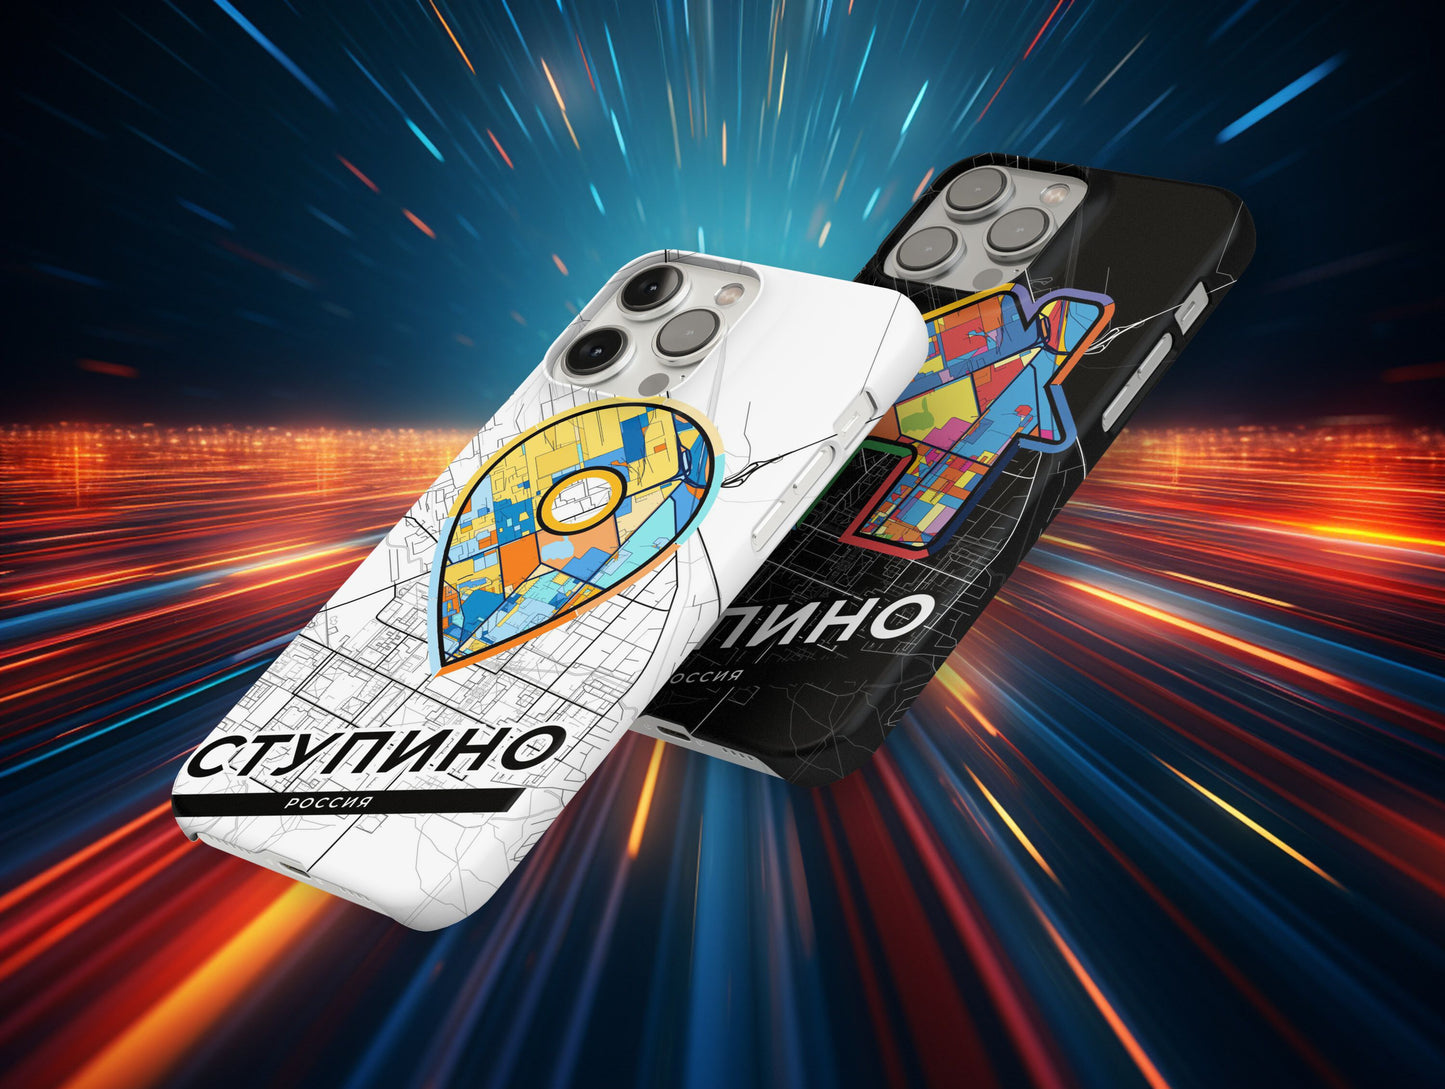 Stupino Russia slim phone case with colorful icon